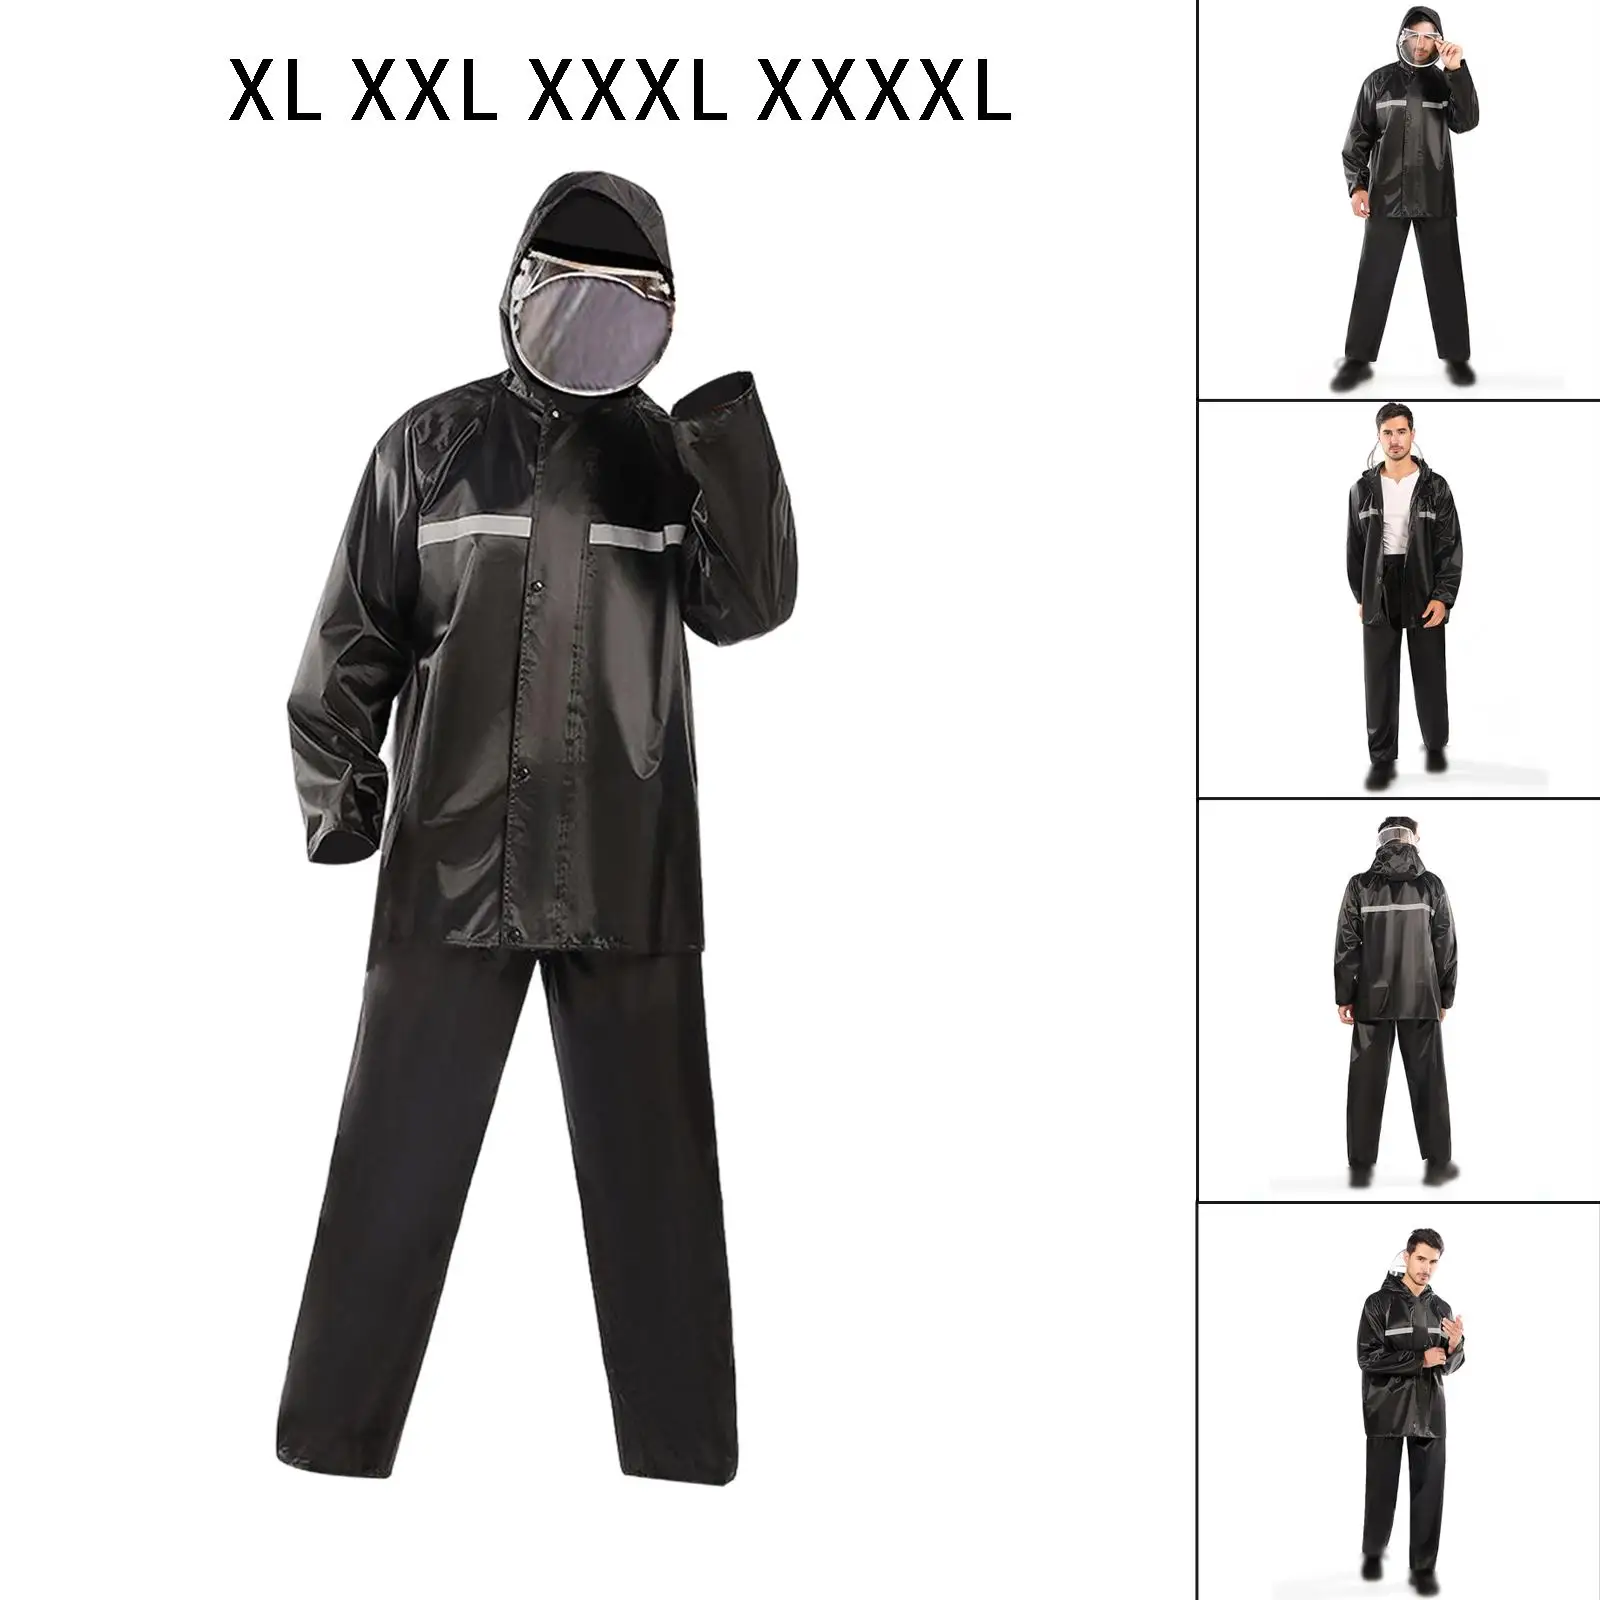 Raincoat Suit Impermeable Waterproof Reflective Strip Men Women Rain Cover Hooded Motorcycle Poncho Rainwear Hiking Fishing